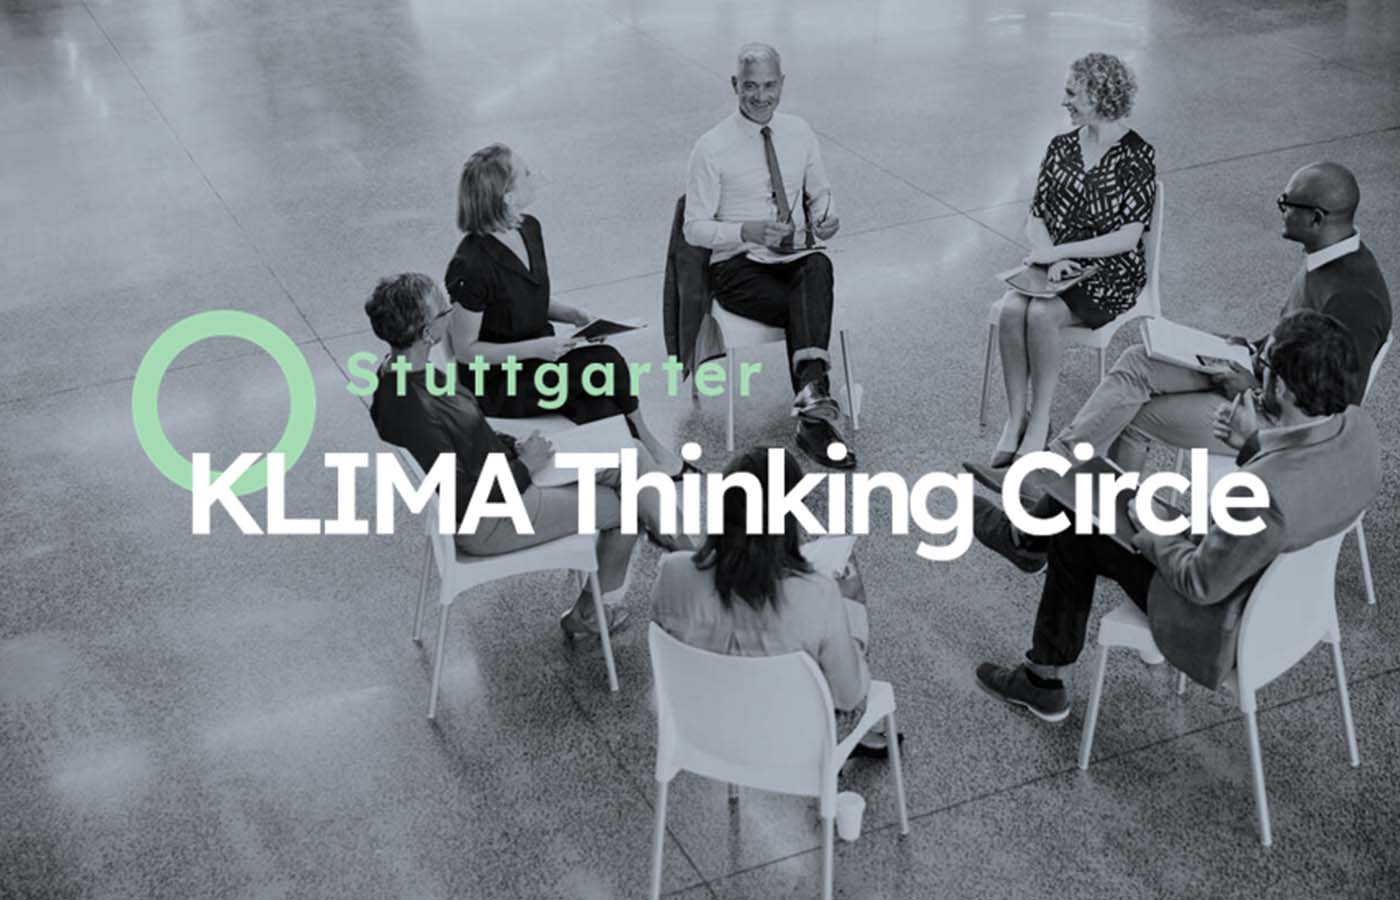 stuttgart-klima-thinkingcircle